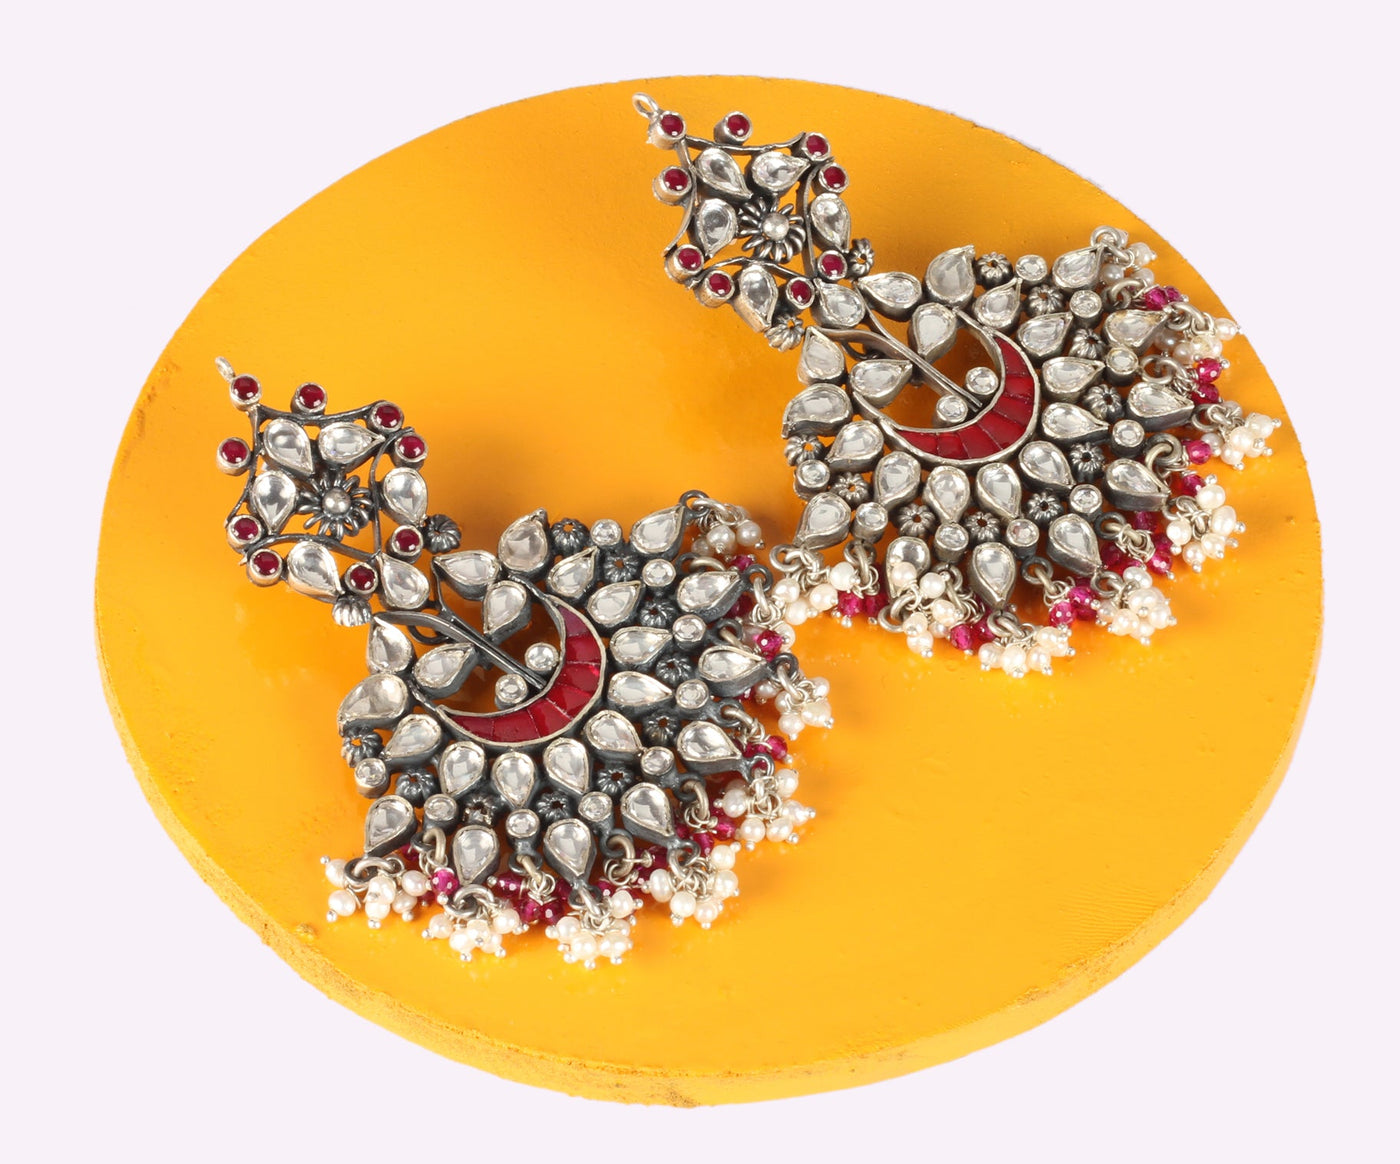 Sangeeta Boochra Red Silver Tone Handmade Earrings with Pearls-Earrings-Sangeeta Boochra